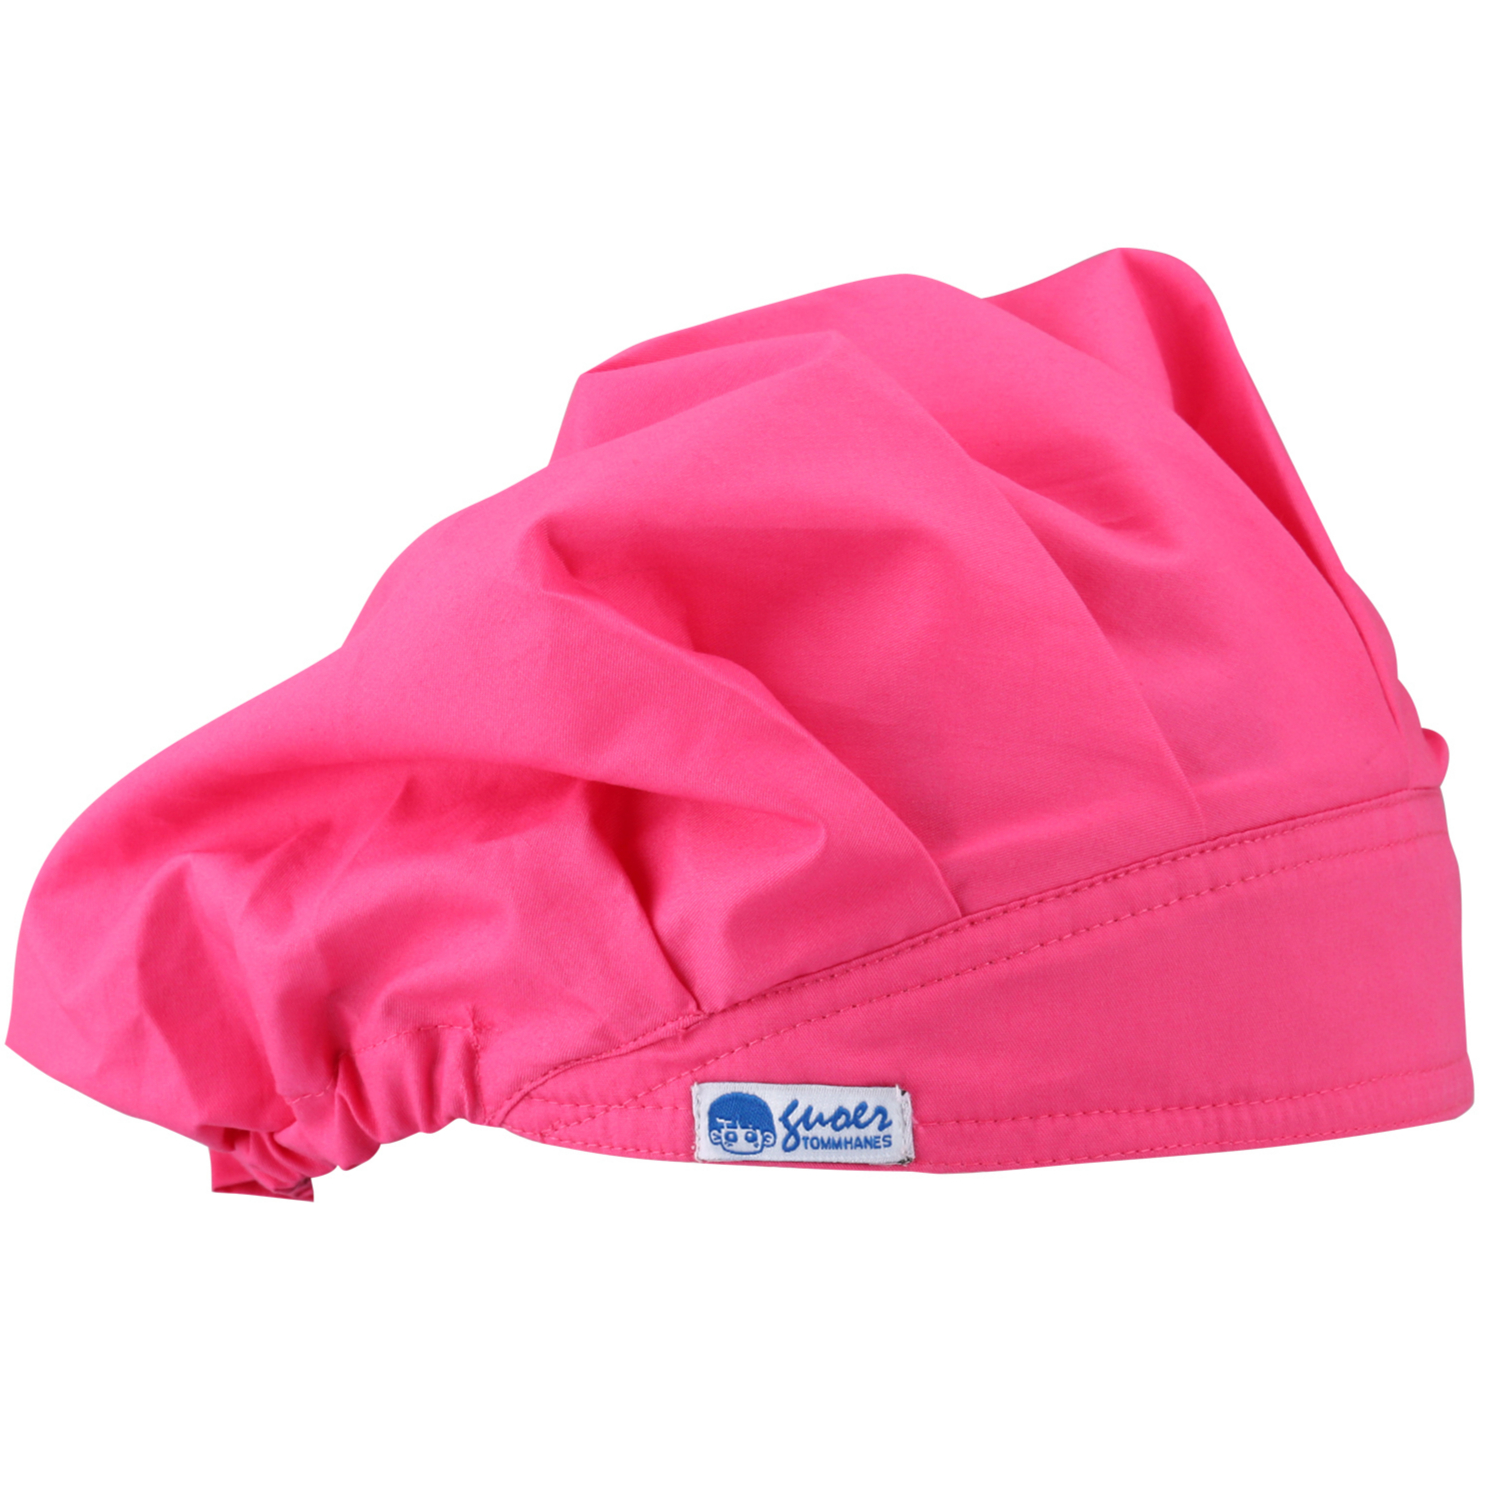 GUOER 100% Cotton Reusable Nurse Cap Scrub Hat Bouffant Scrub Cap One Size Multi Color